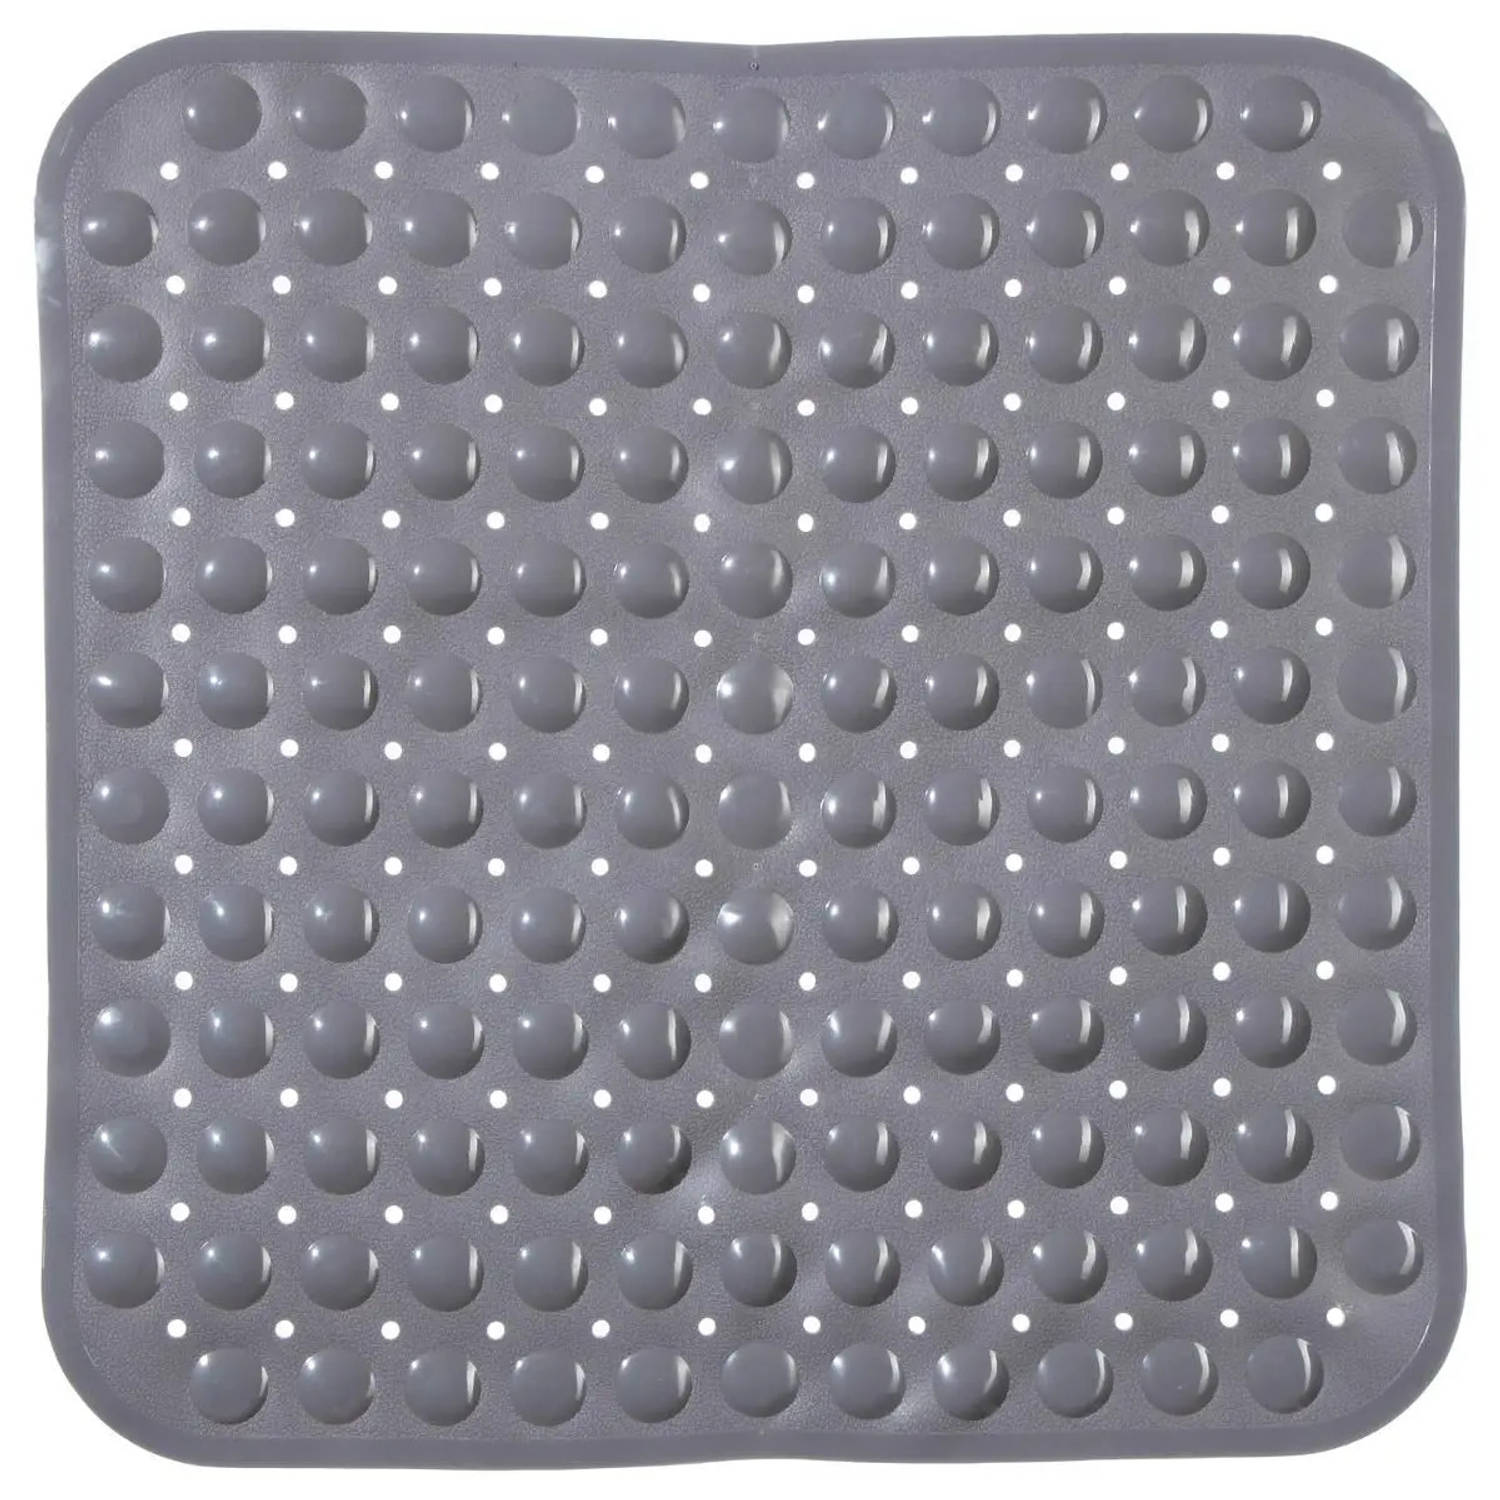 Anti-slip badkamer douche/bad mat grijs 54 x 54 cm vierkant - Badmatjes